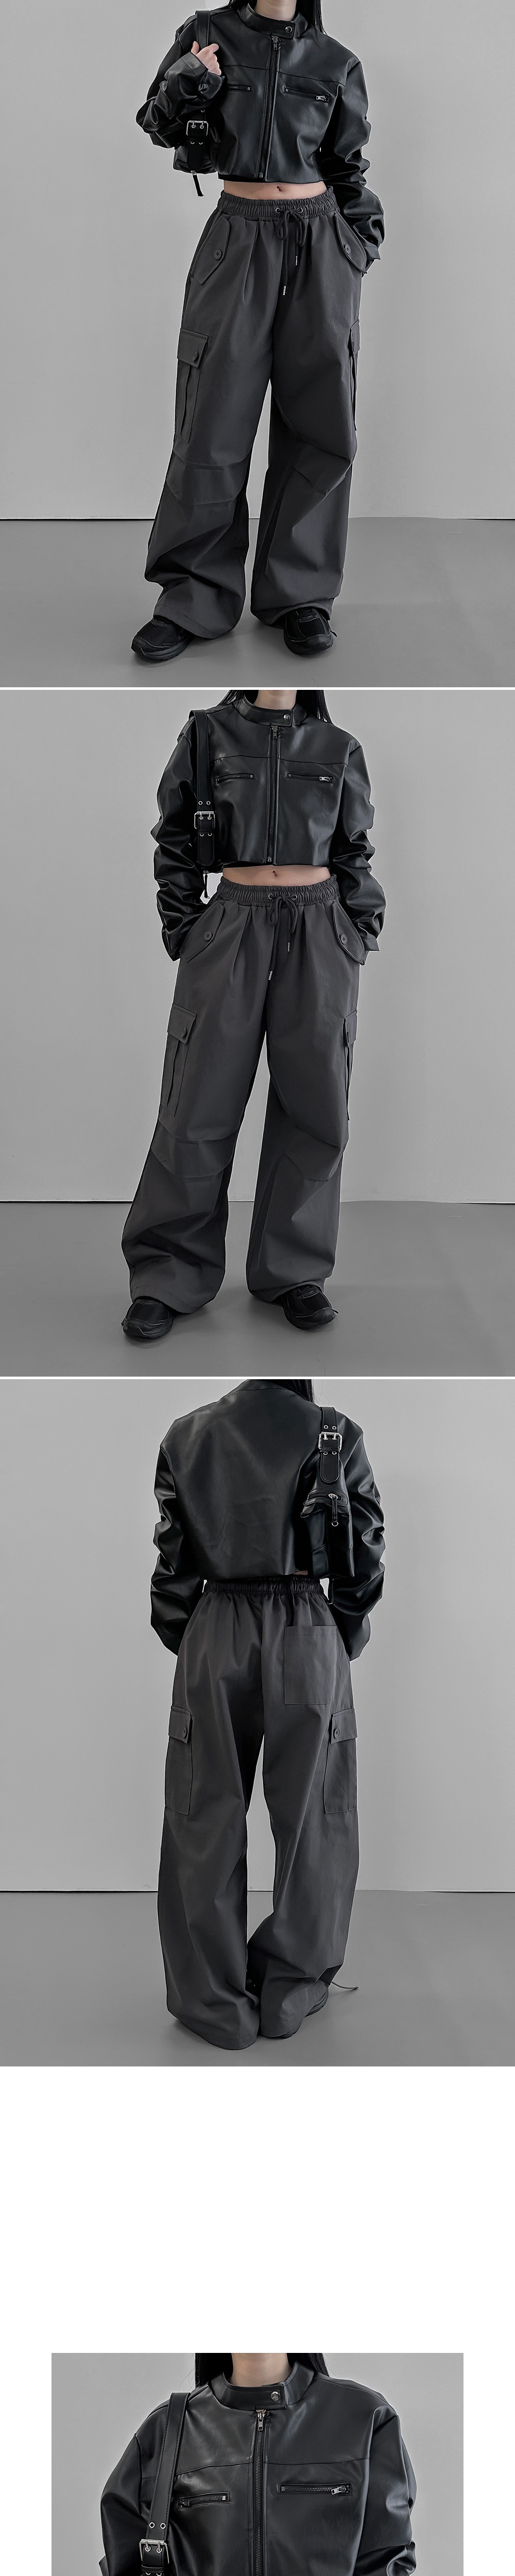 Jacket detail image-S1L7